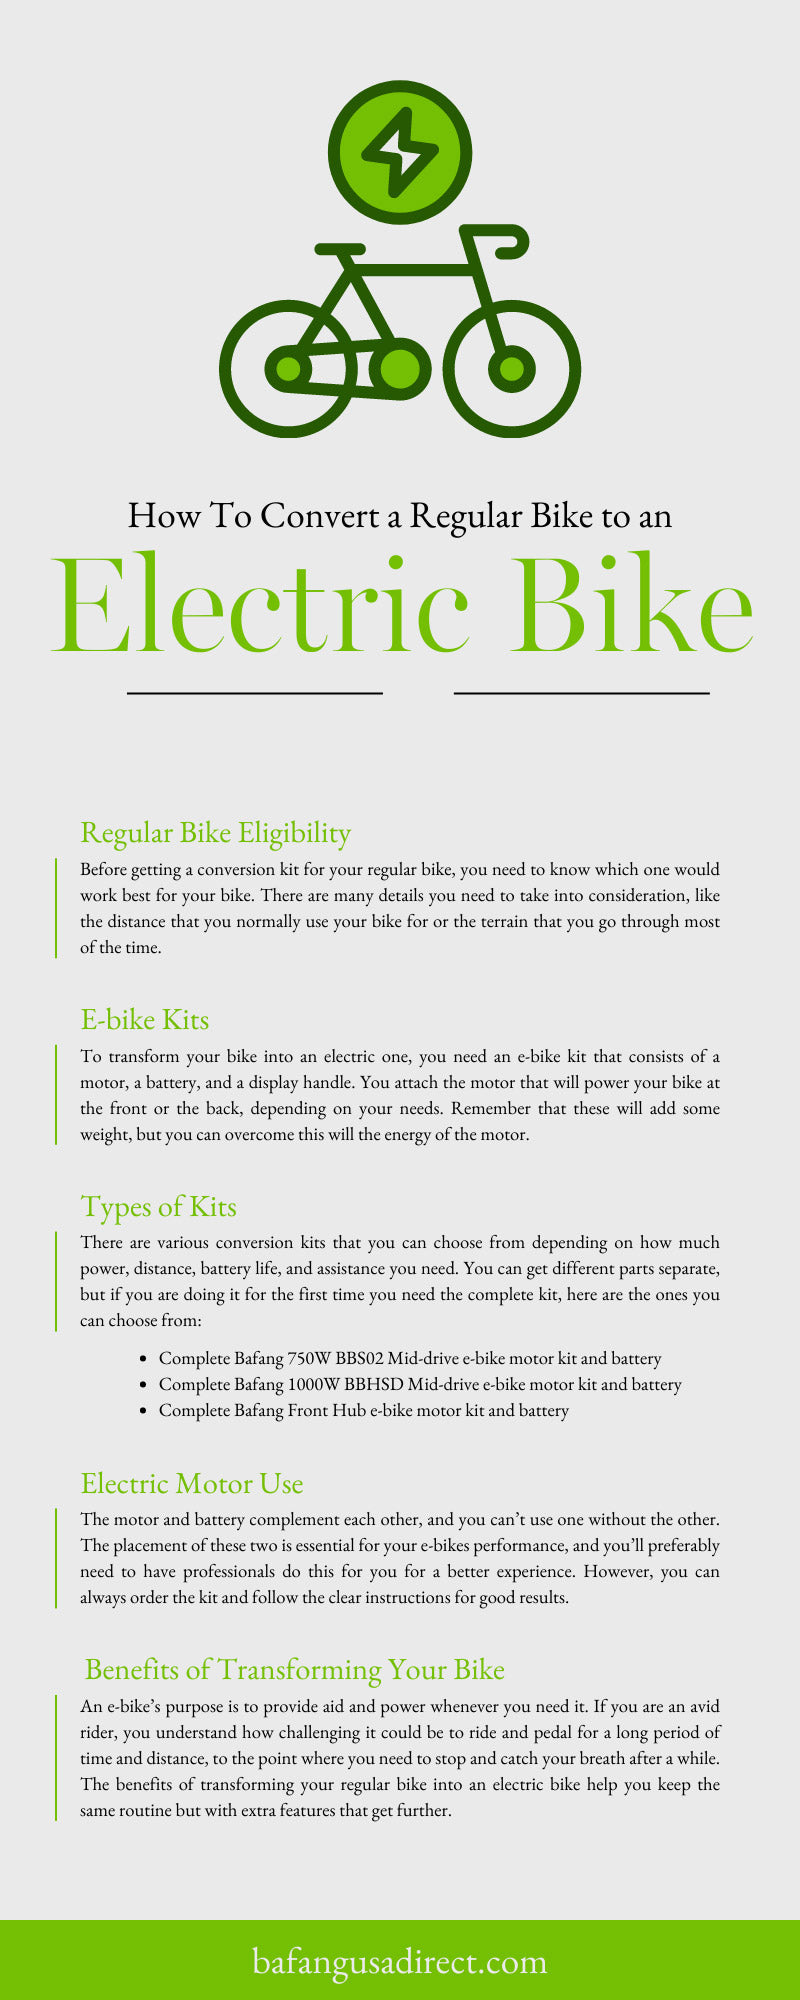 How To Convert a Regular Bike to an Electric Bike